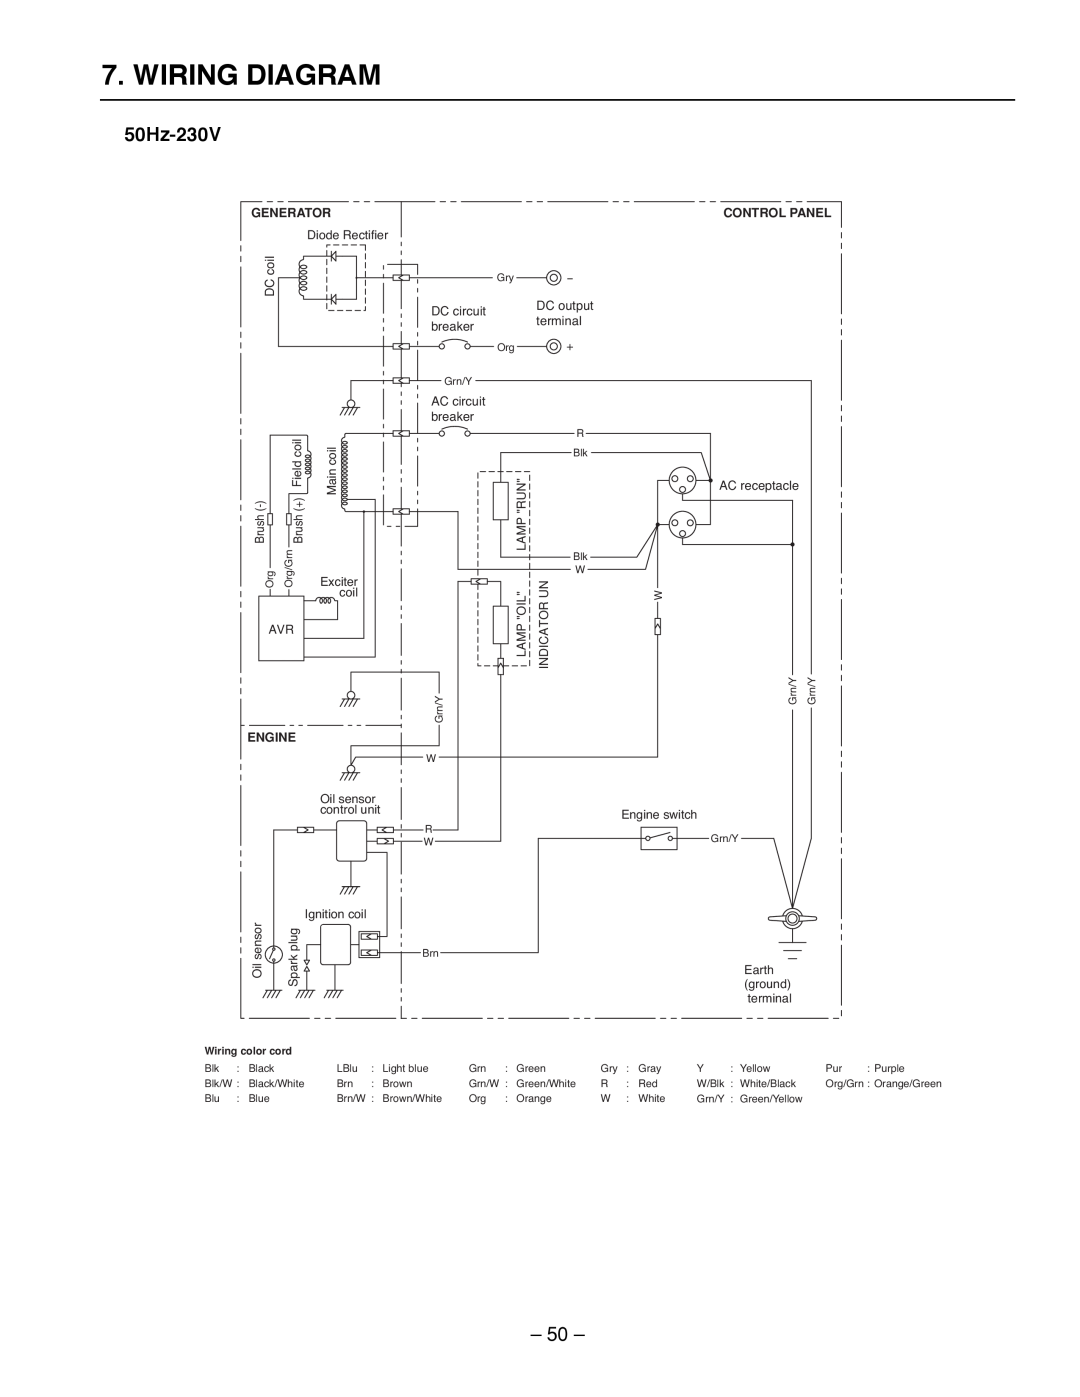 Subaru R1100 Wiring Diagram, 50Hz-230V, Generator, DC coil, Engine, DC circuit, terminal, breaker, AC circuit 